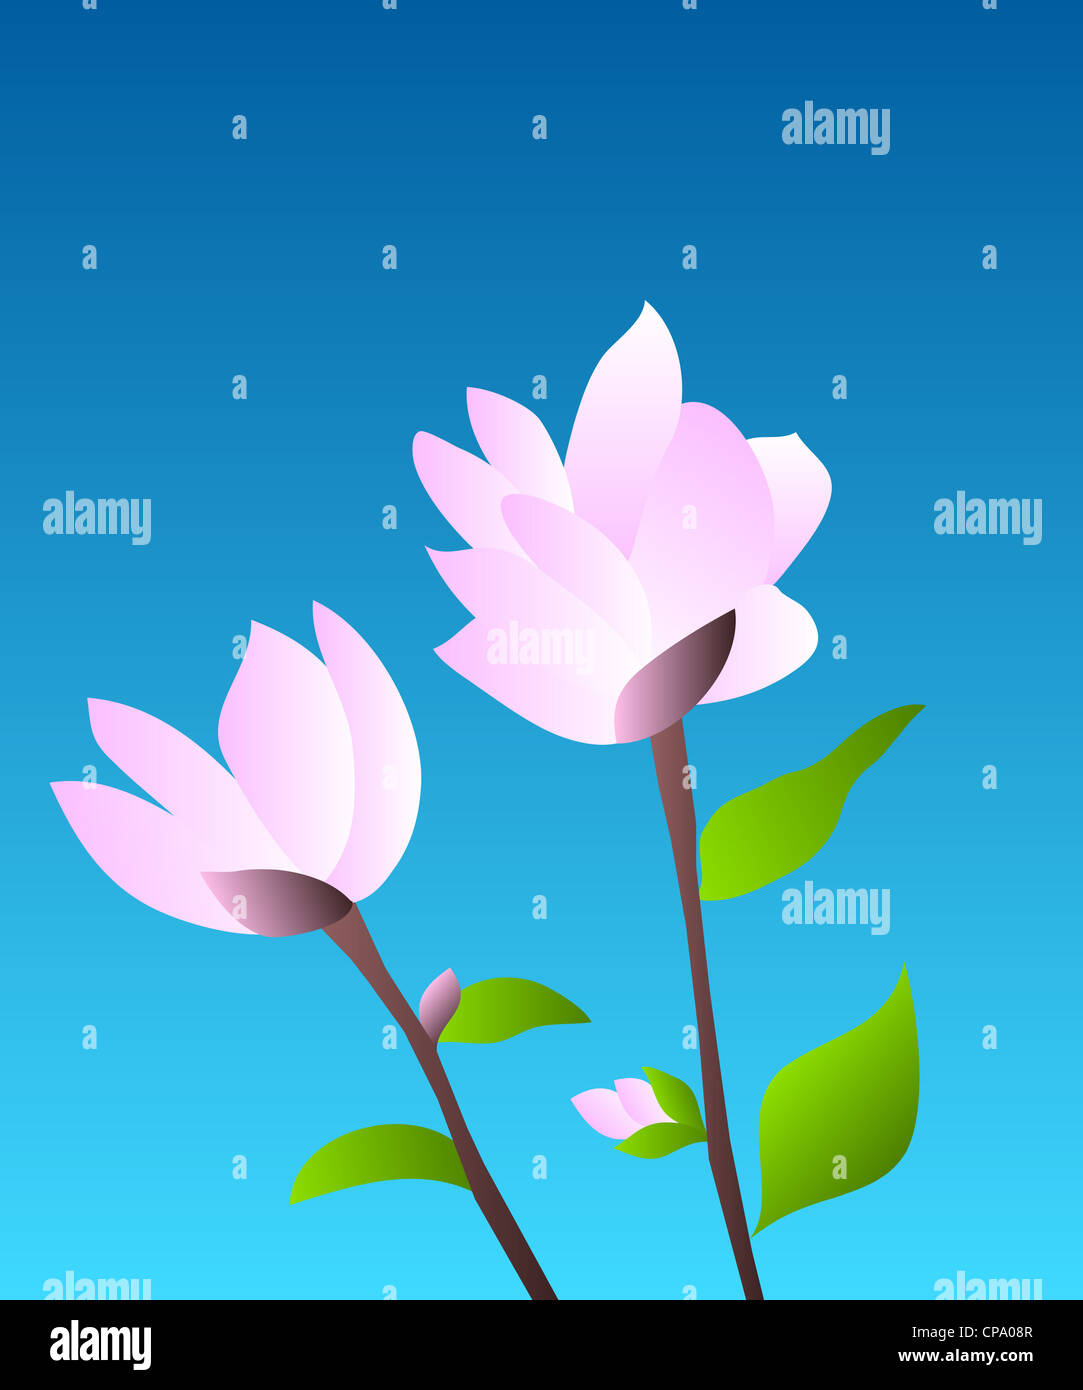 Pink magnolia flowering plant illustration on blue background Stock Photo